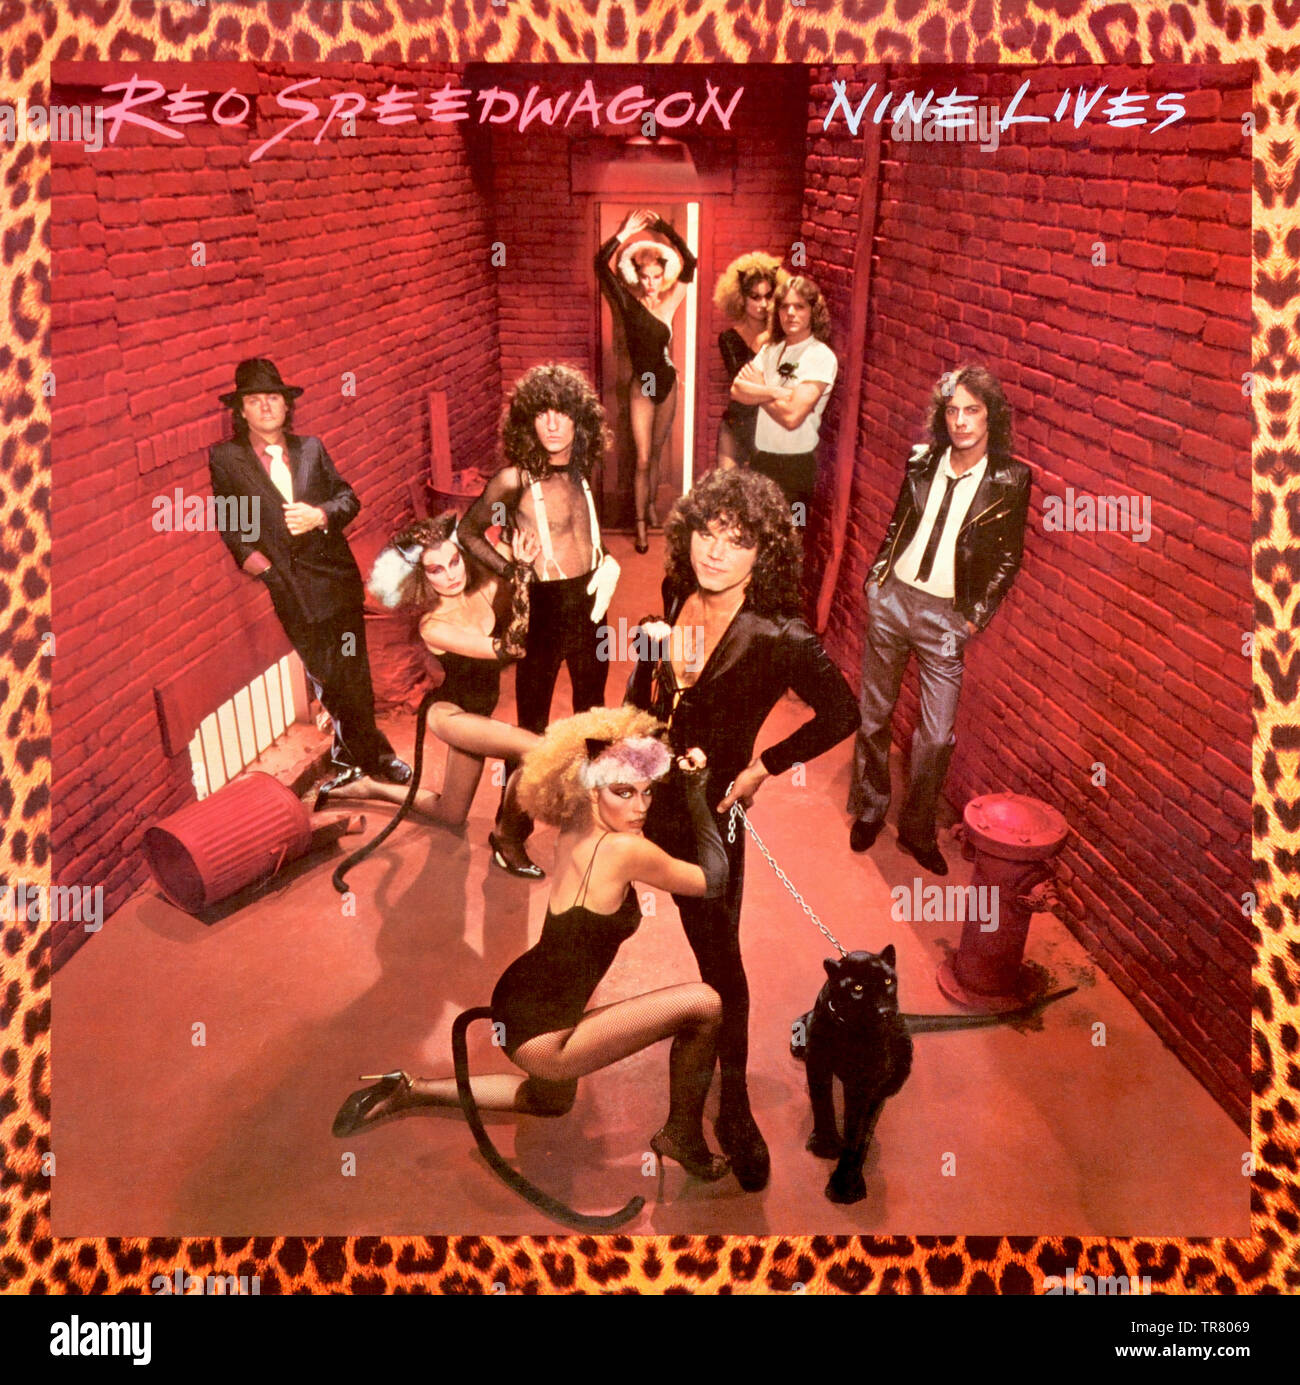 Reo Speedwagon - original vinyl album cover - Nine Lives - 1979 Stock Photo